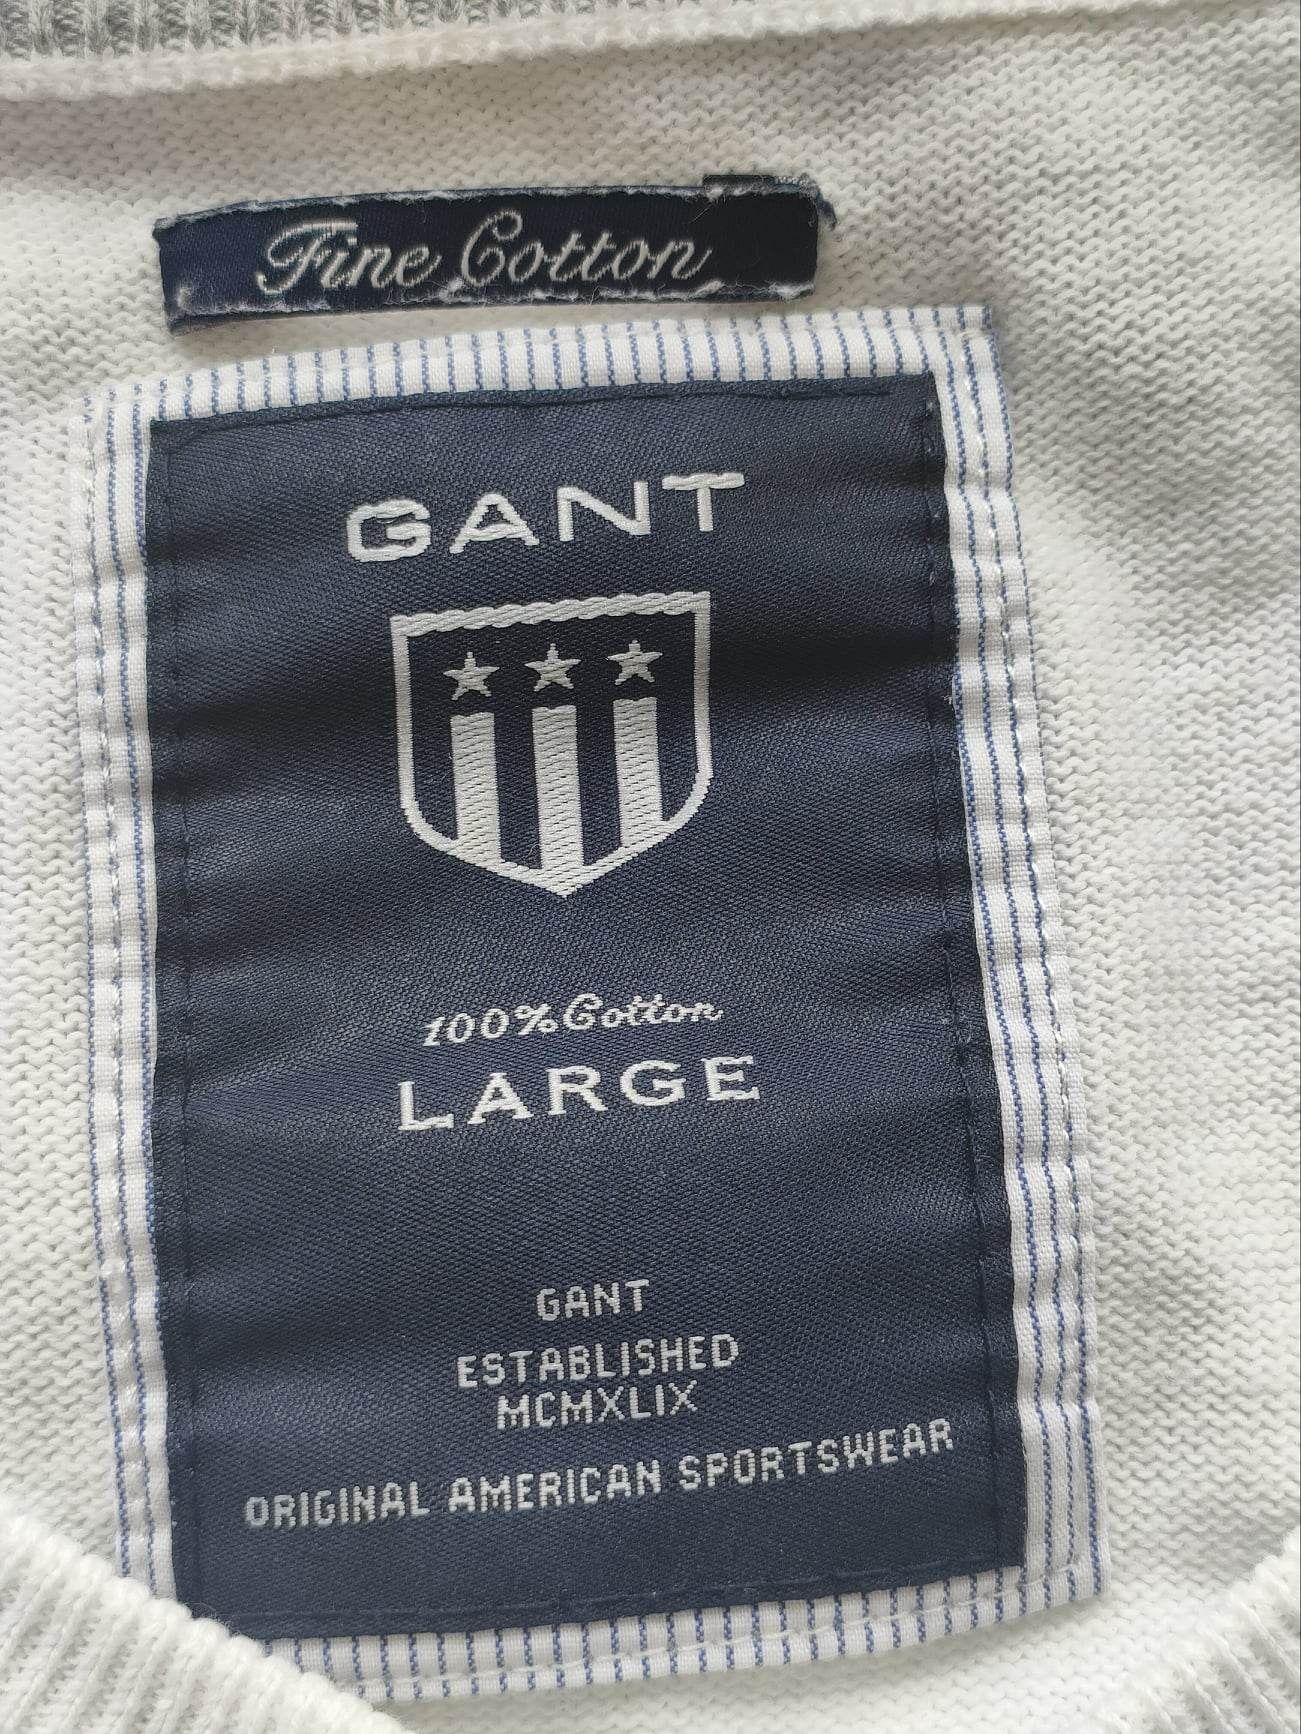 Sweter Gant, rozmiar L, męski